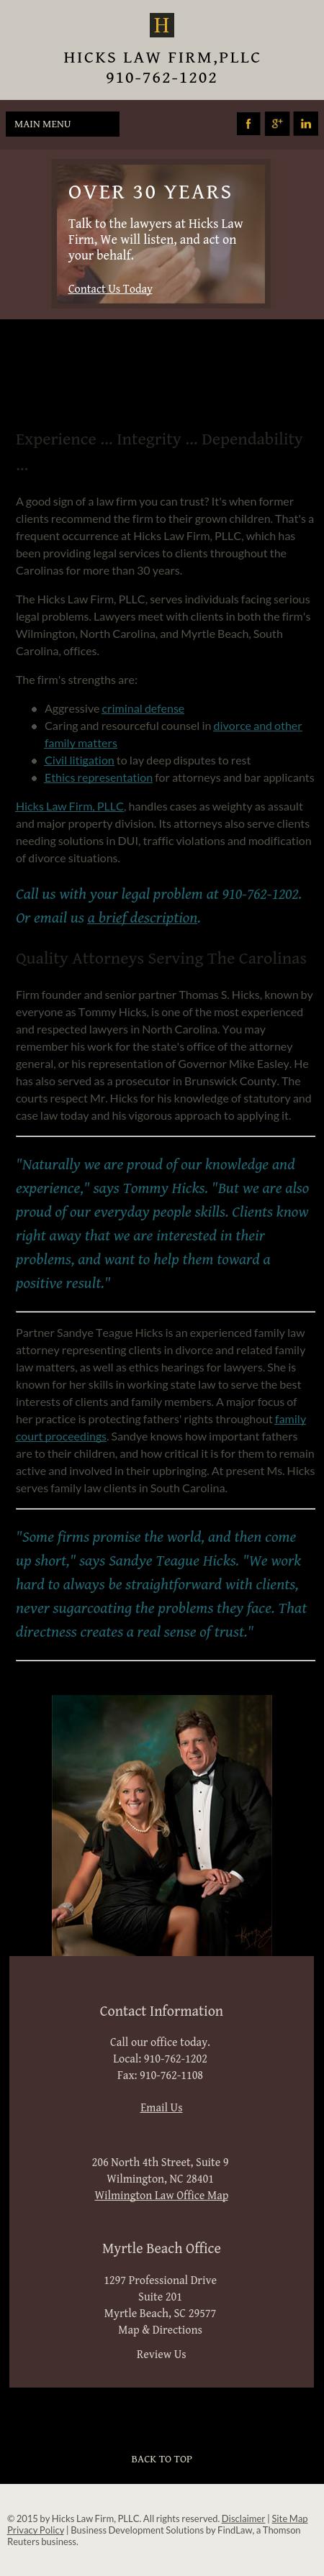 Hicks Law Firm, PLLC - Myrtle Beach SC Lawyers